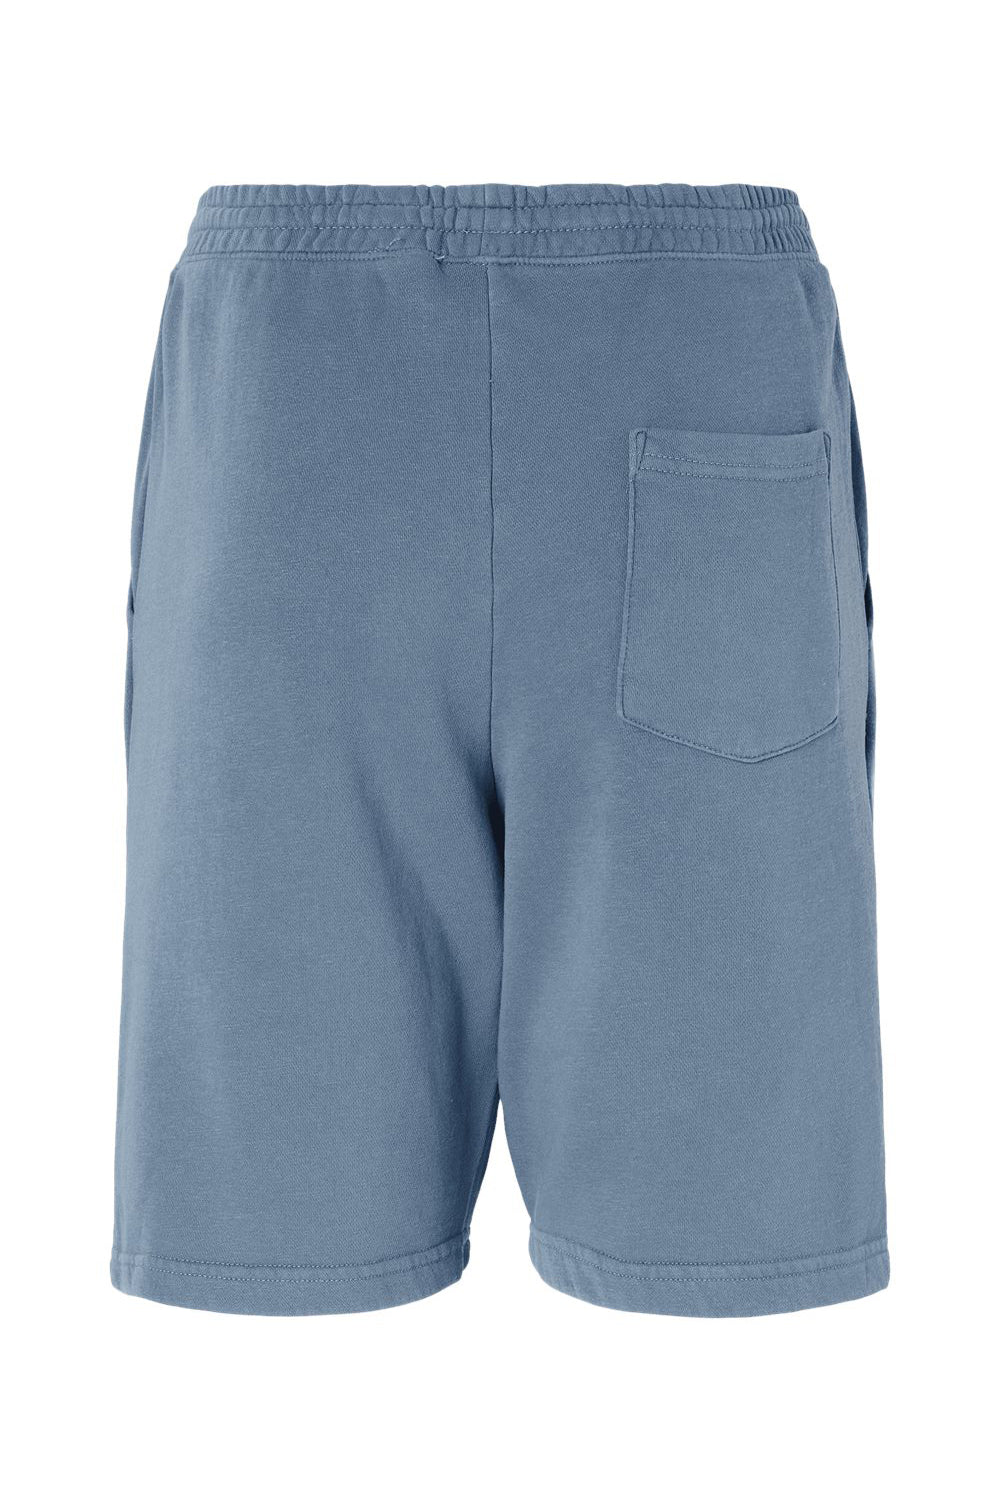 Independent Trading Co. PRM50STPD Mens Pigment Dyed Fleece Shorts w/ Pockets Slate Blue Flat Back